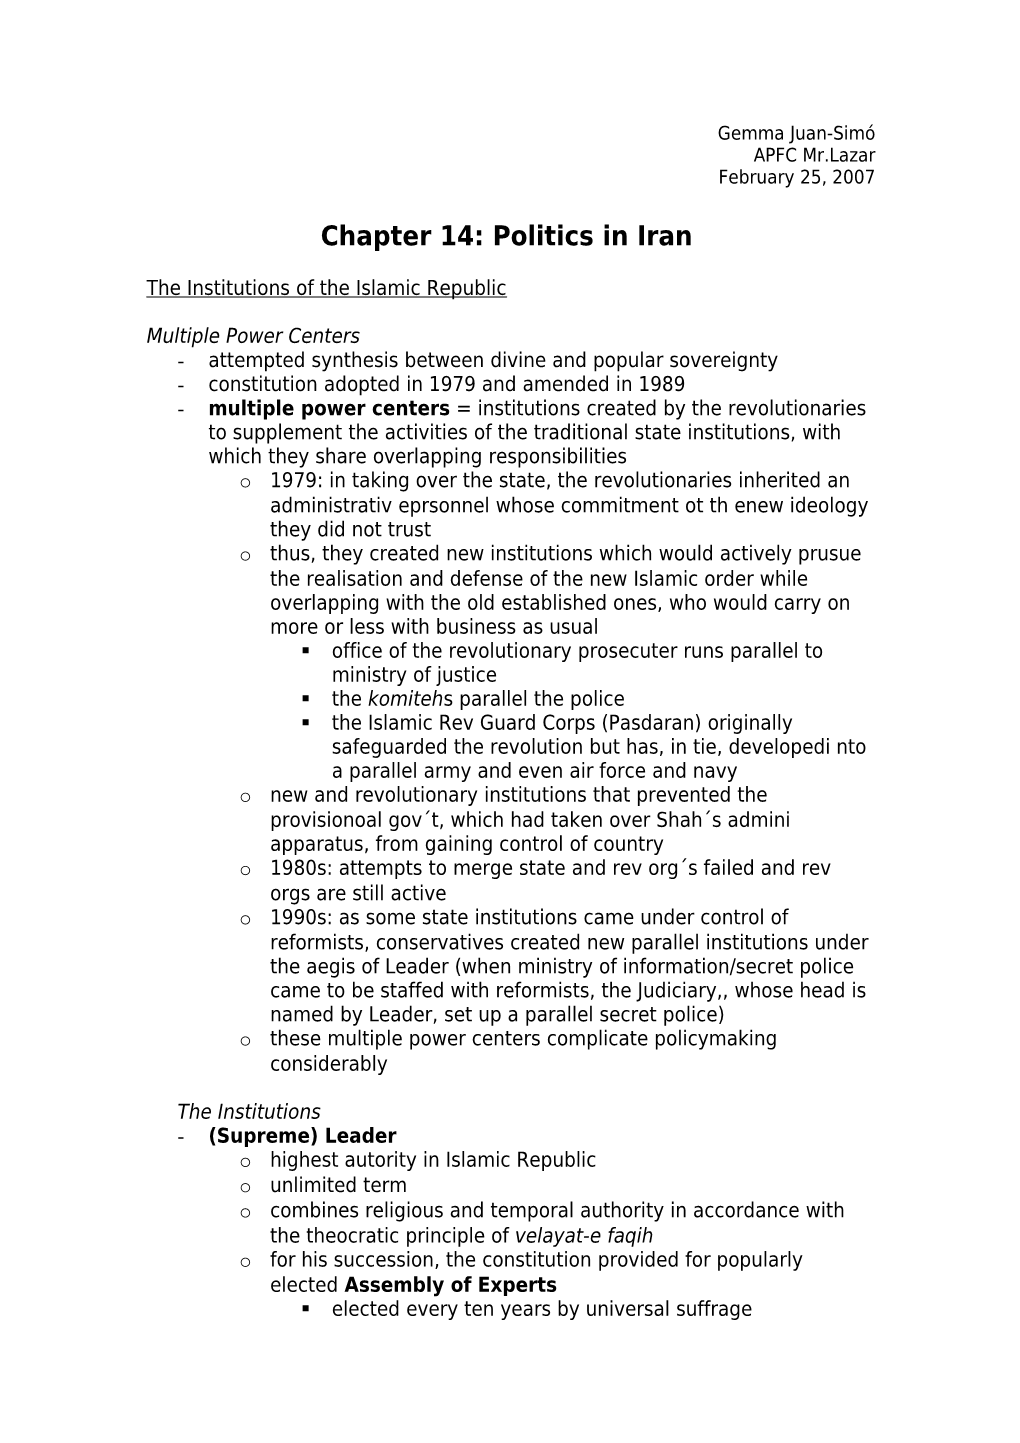 Chapter 14: Politics in Iran